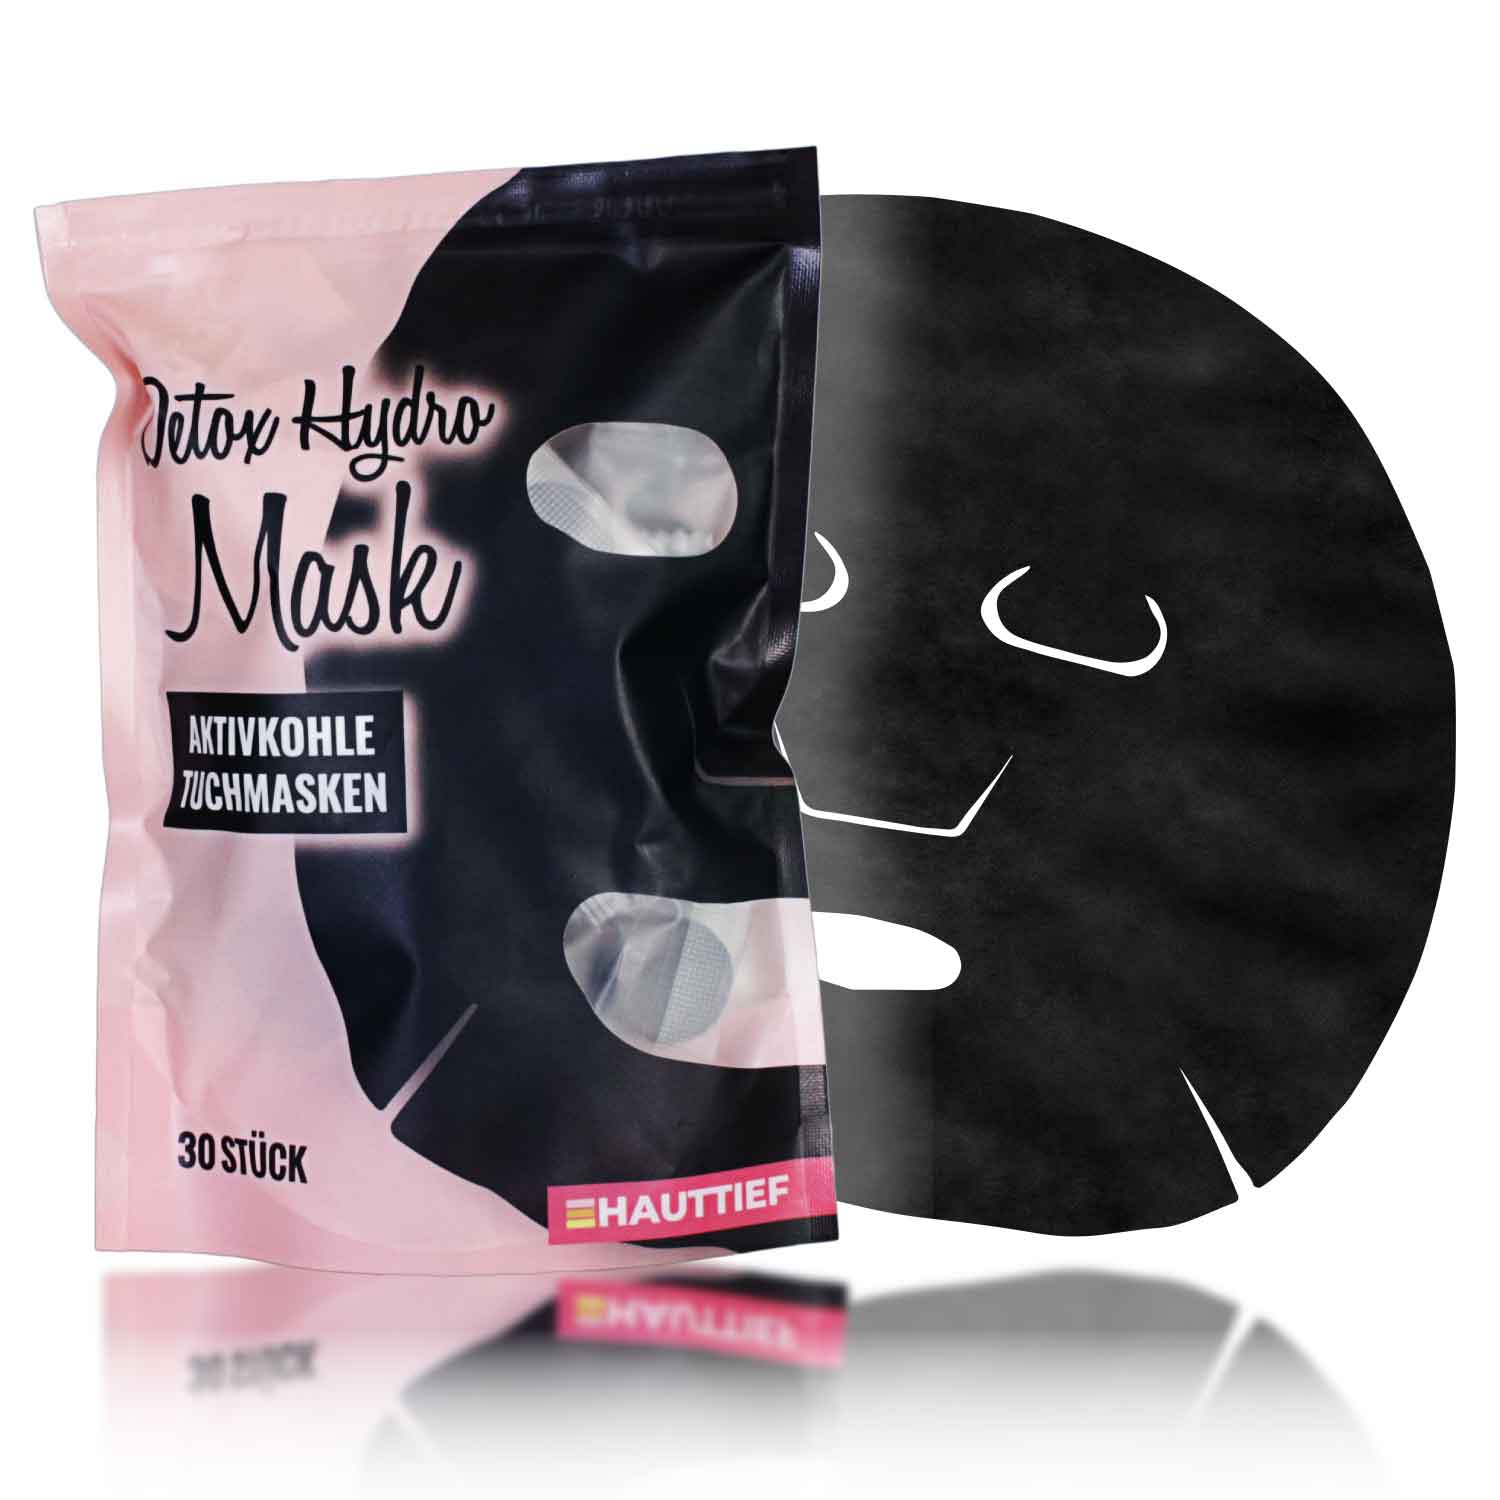 Detox Hydro Mask